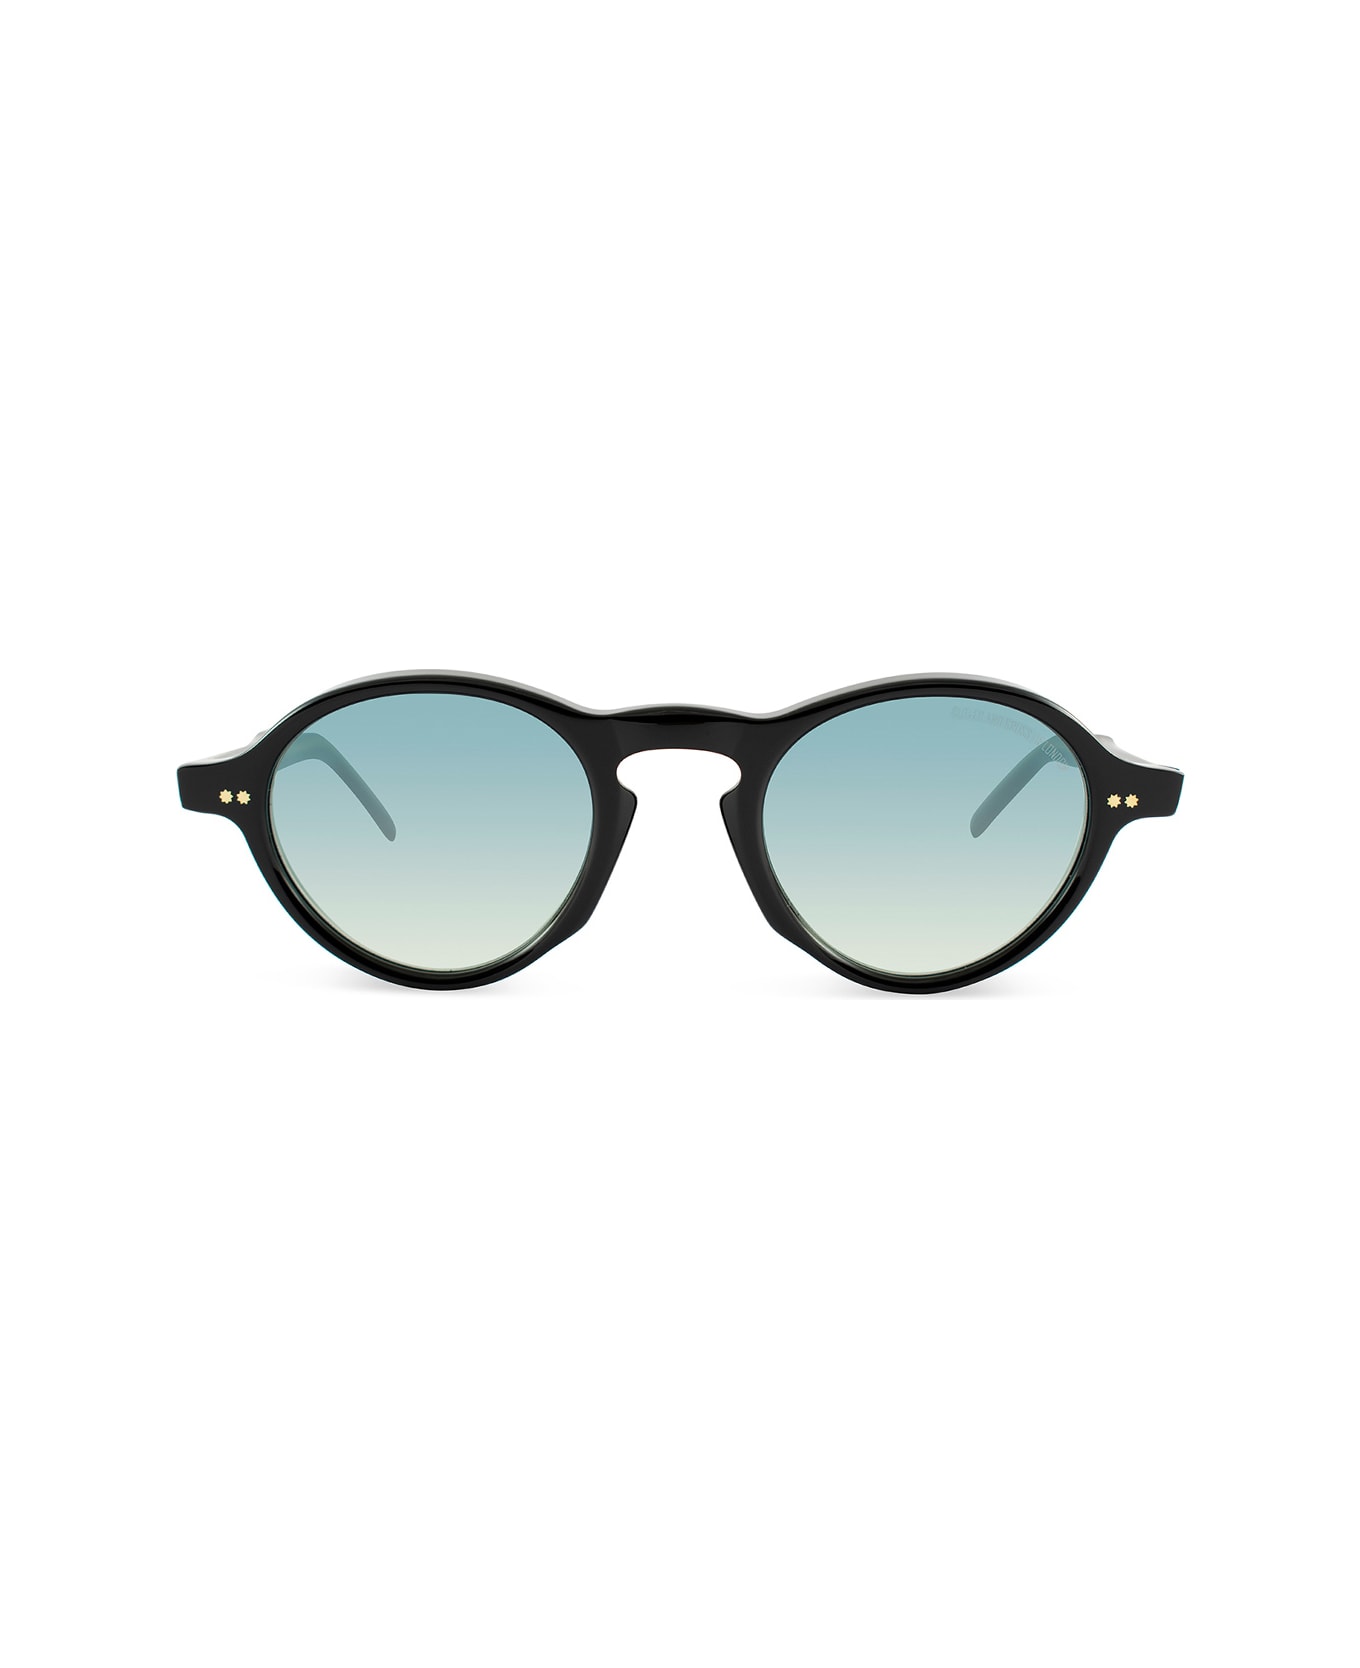 Cutler and Gross Gr08 01 Black Sunglasses - Nero